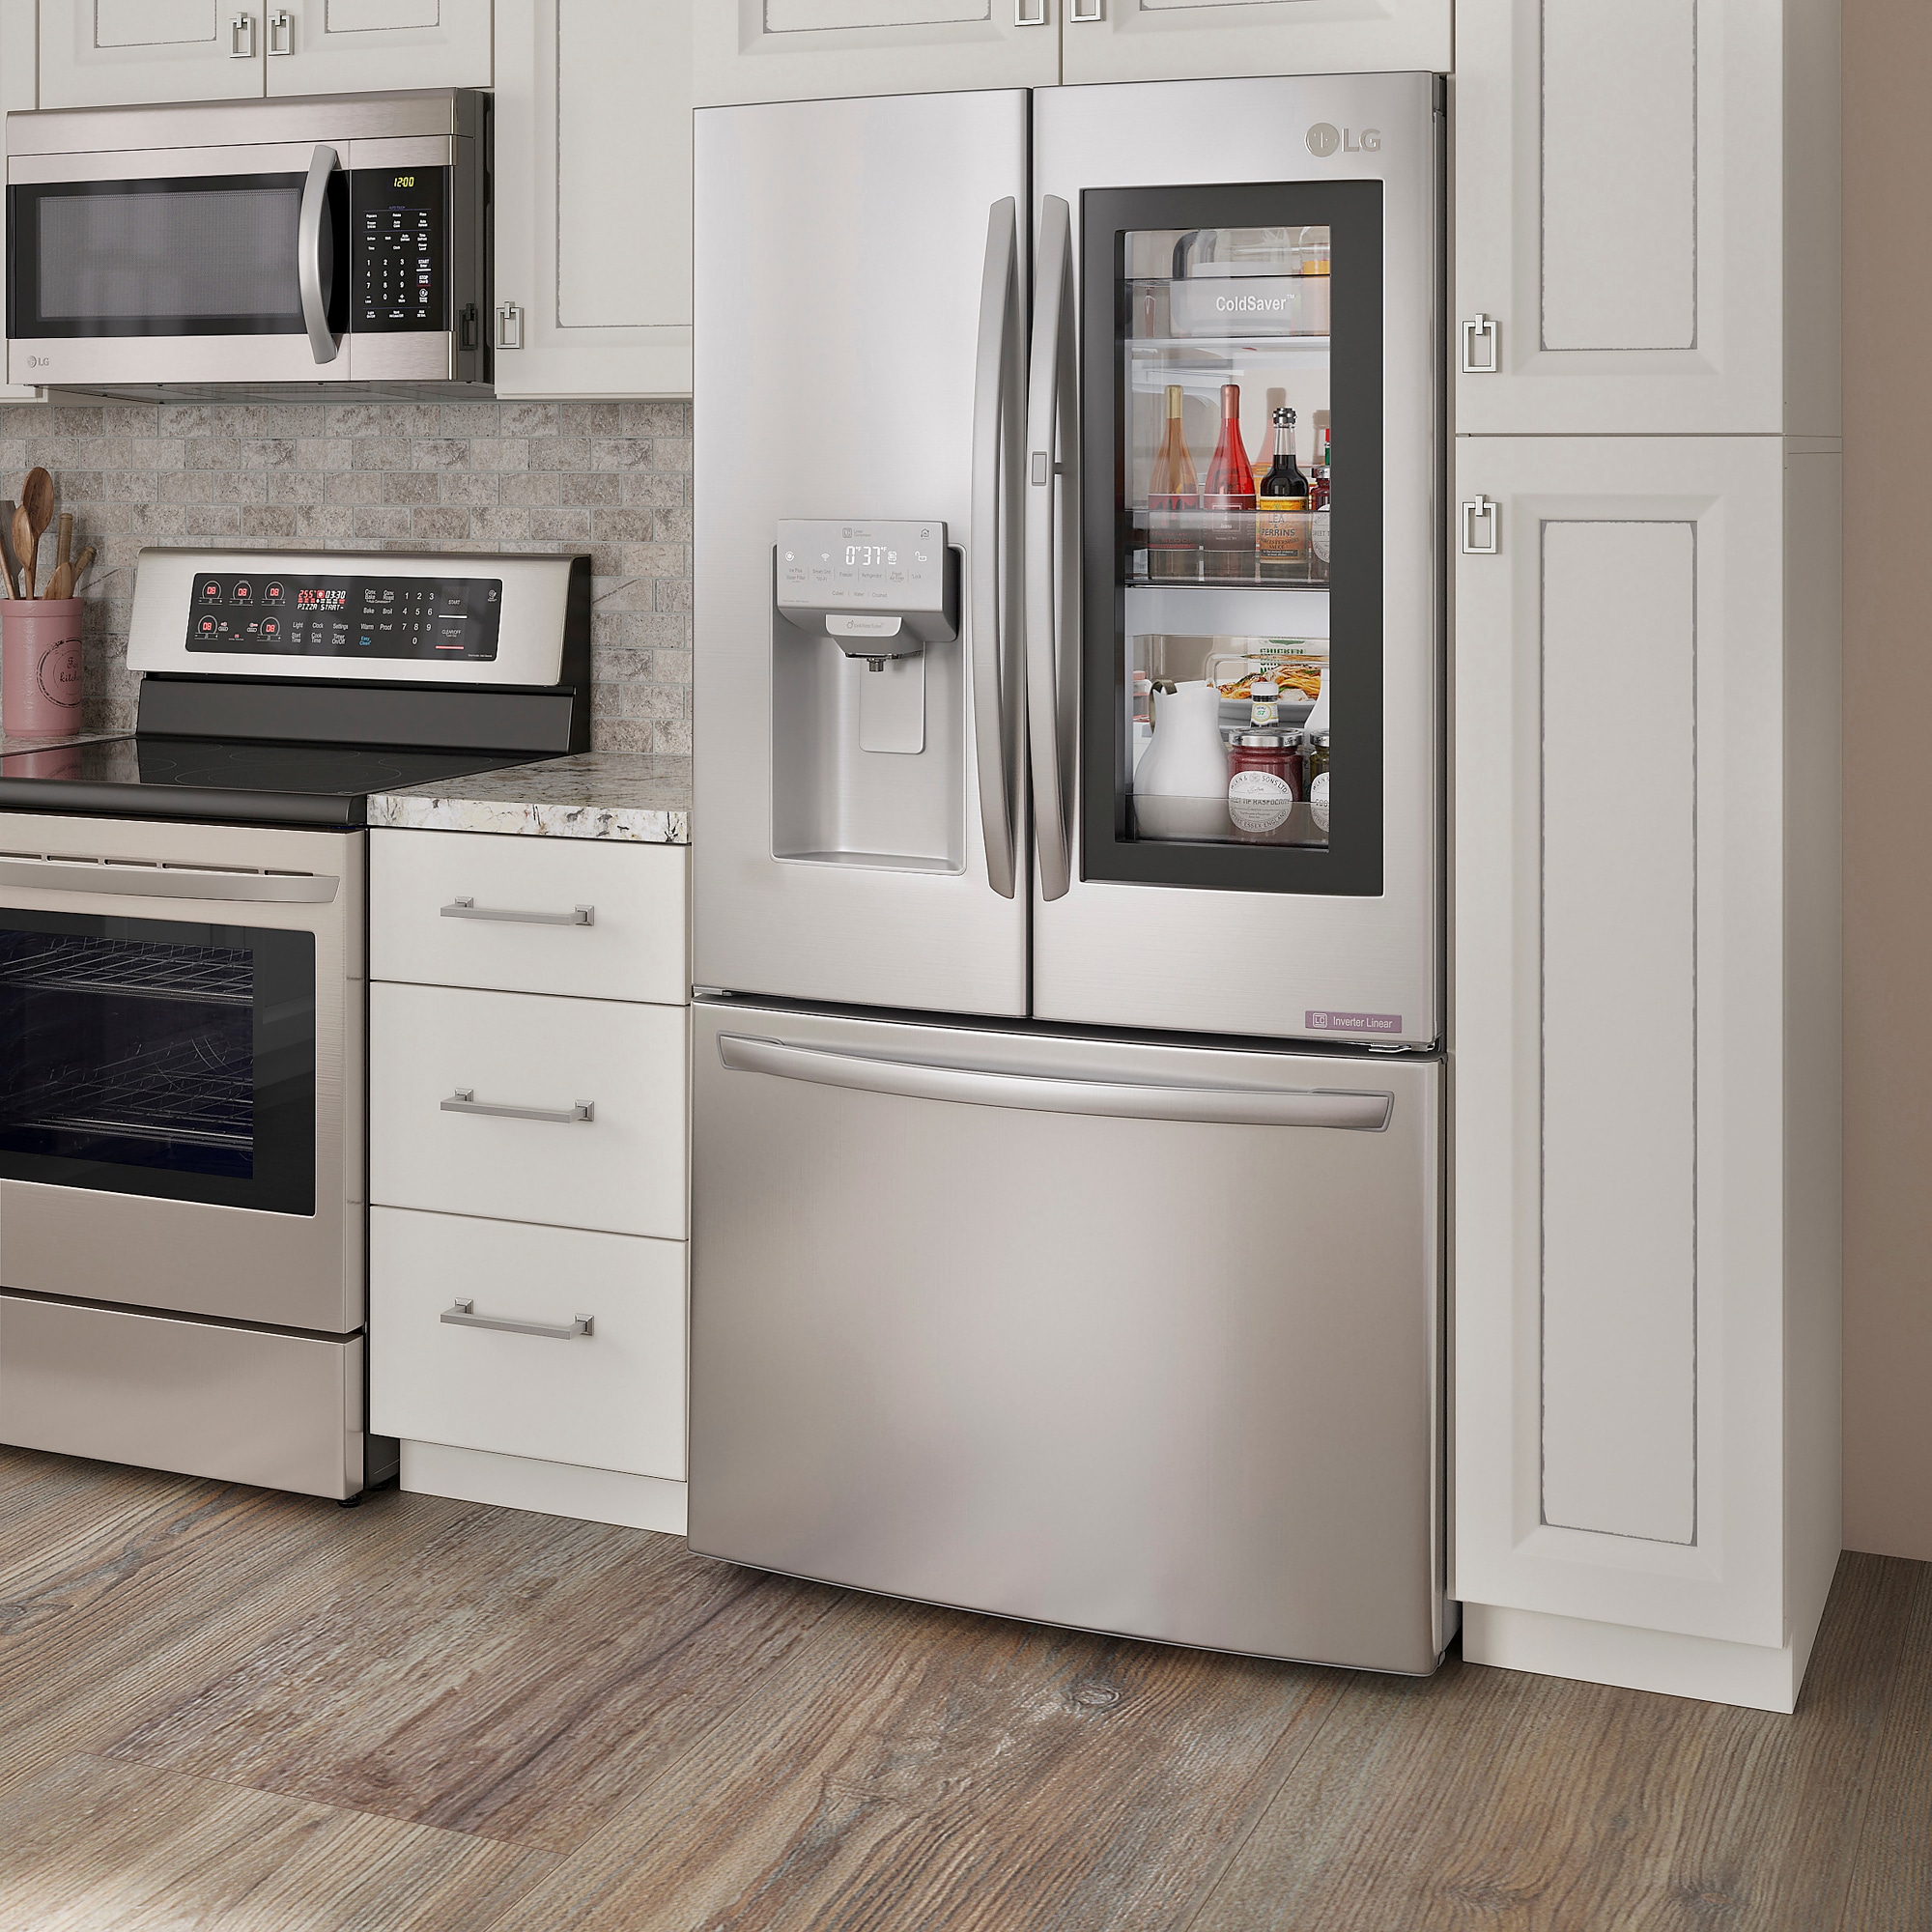 LG 26 cu. ft. Smart InstaView Counter-Depth MAX French Door Refrigerator